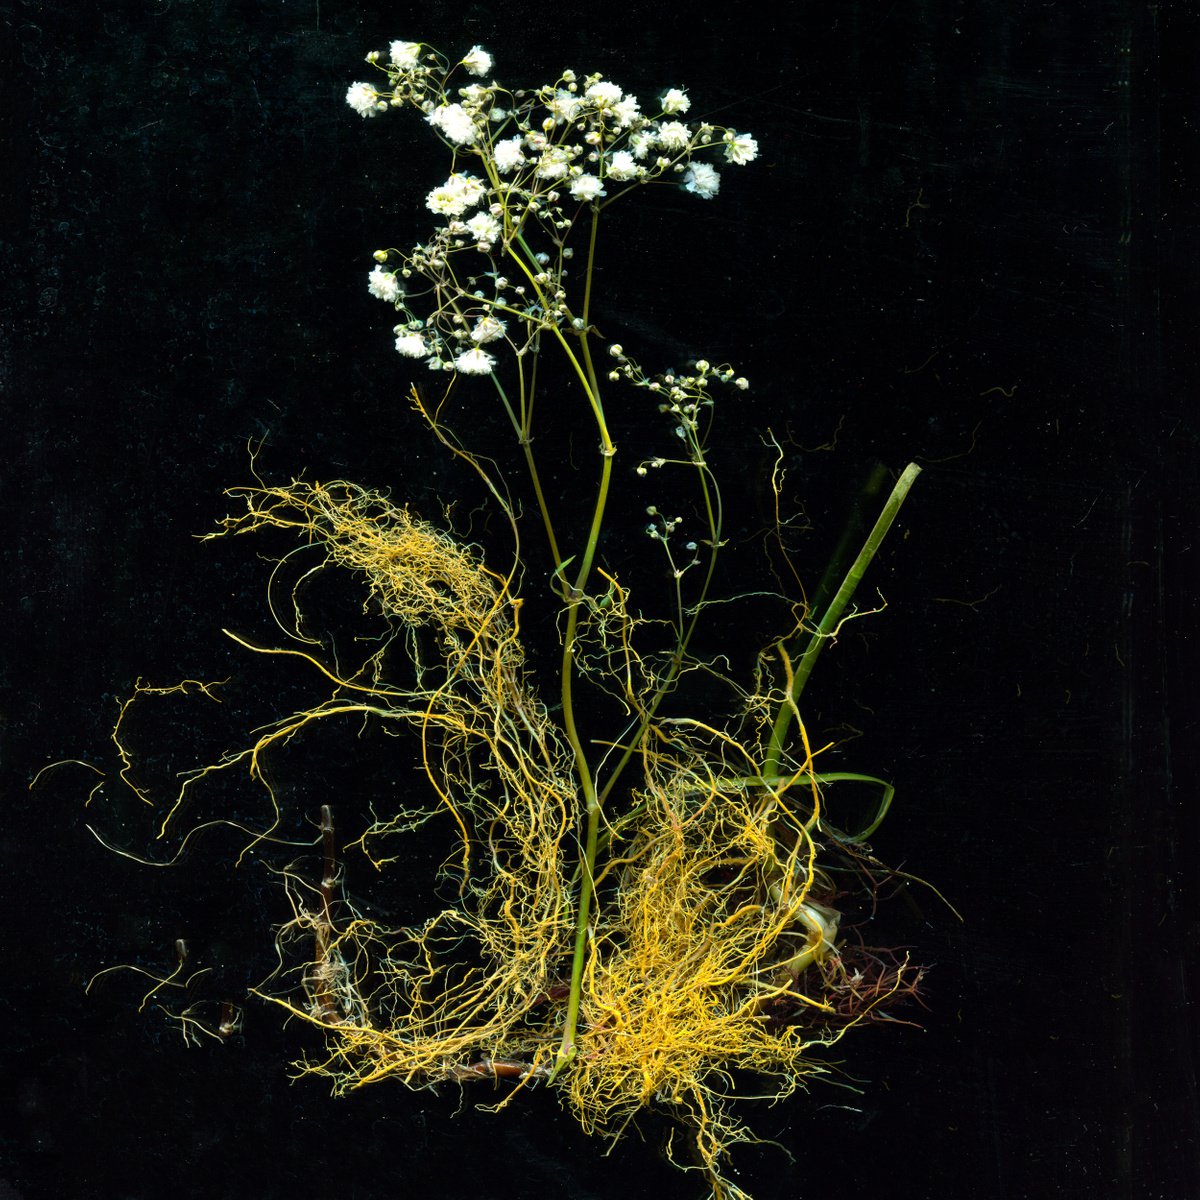 seaweed, stems and algae 3 by Jochim Lichtenberger